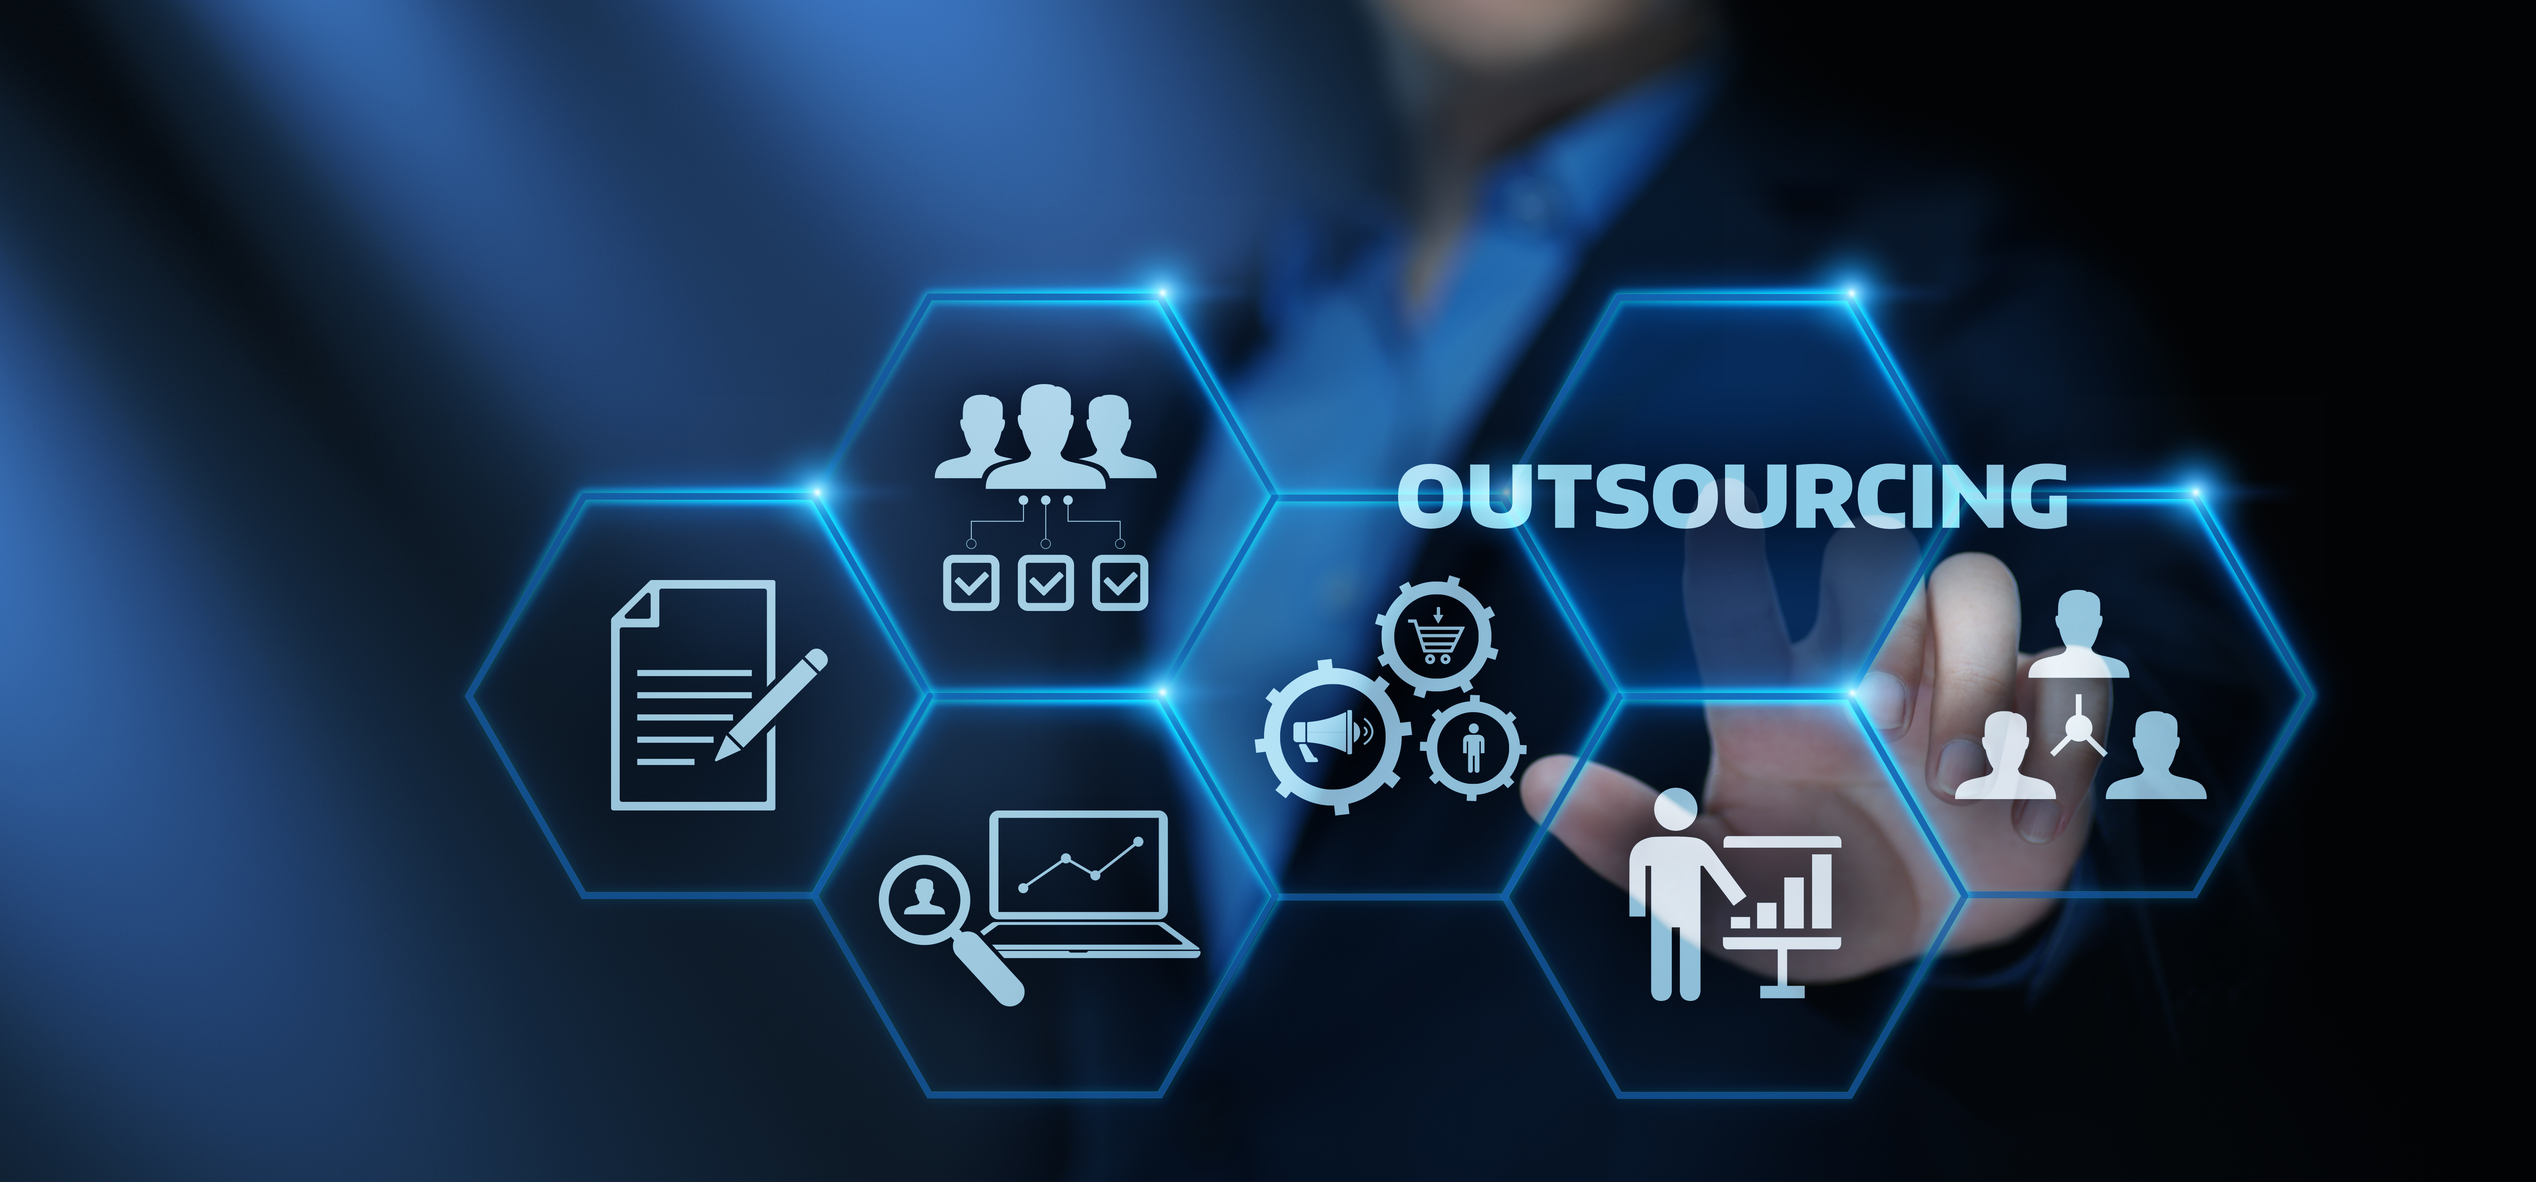 Outsourcing delle risorse umane Business Internet Technology Concept.